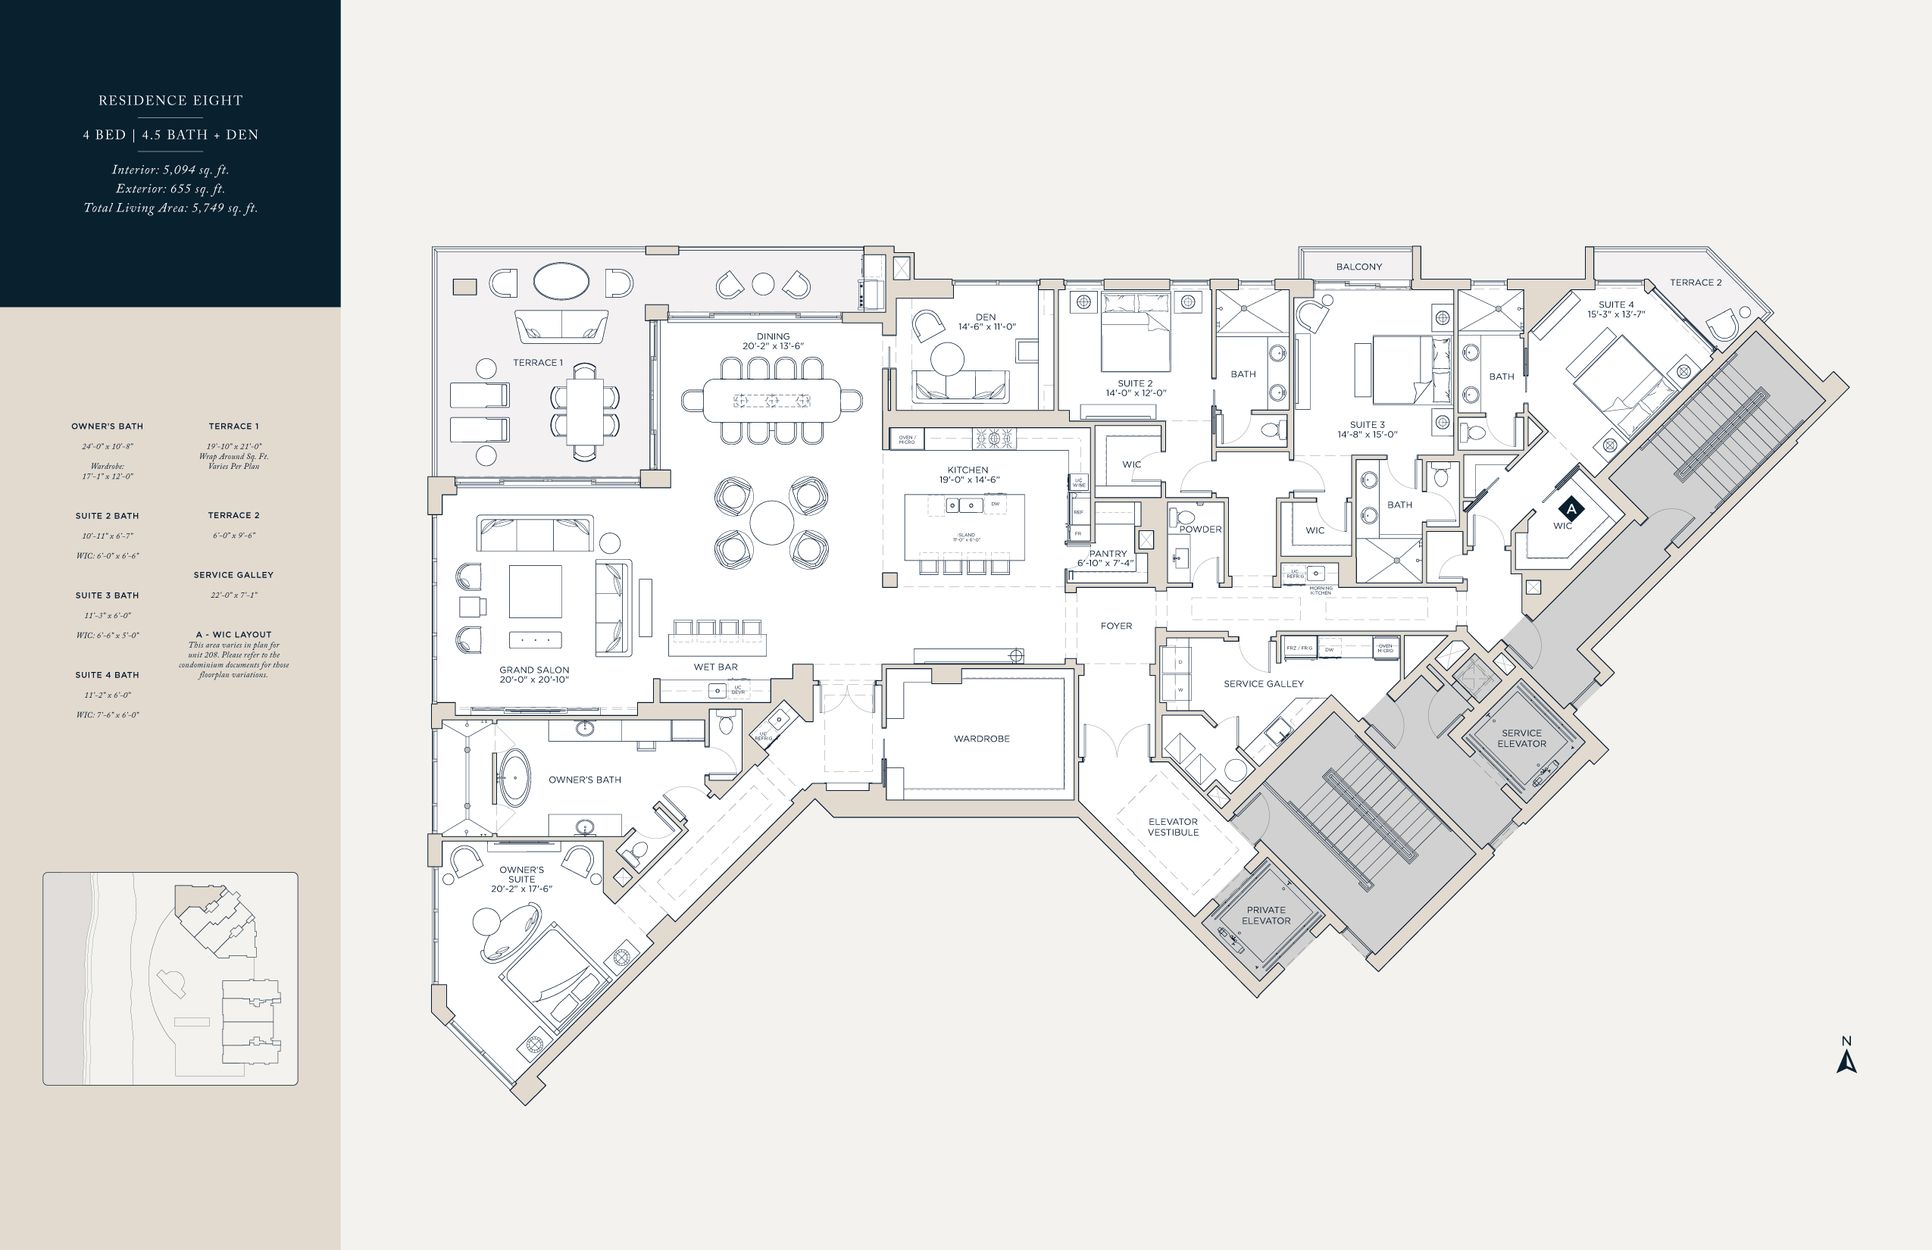 Residence 08 Floorplan:Residence 08 Floorplan